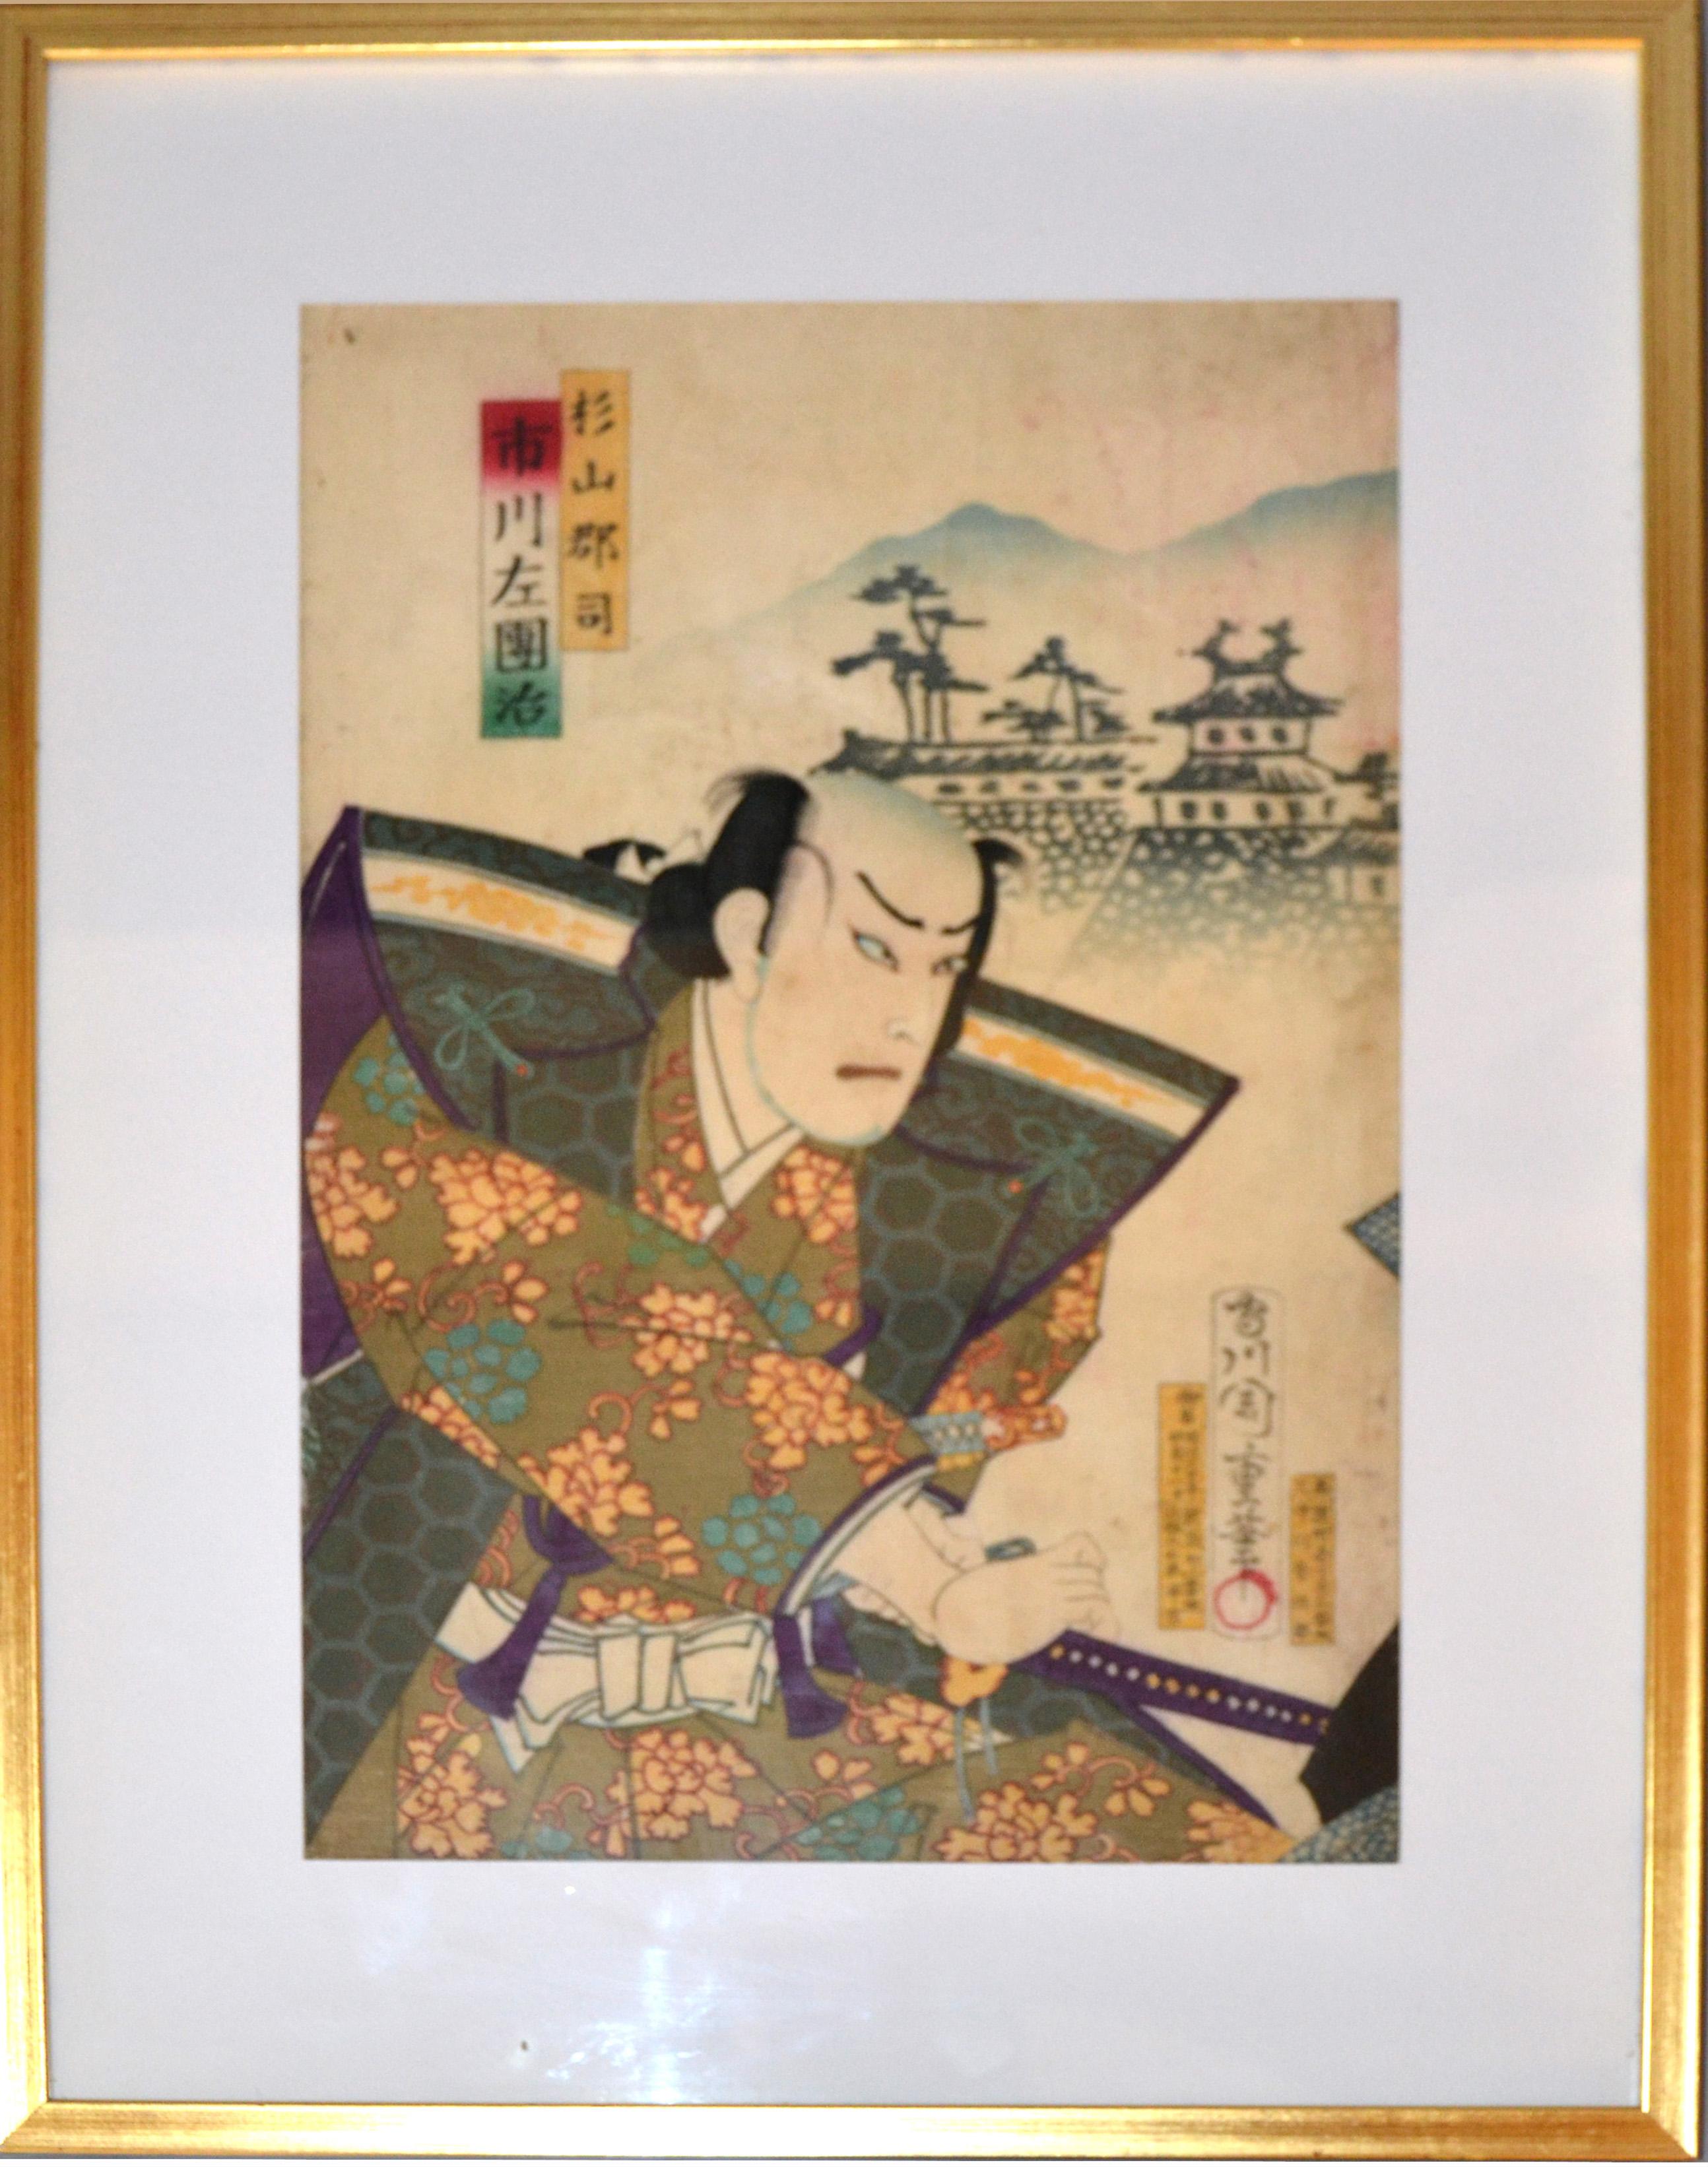 Original Chikashige Morikawa woodblock print on parchment paper in gilt frame.
Marked by Artist: Chikashige Morikawa (1869-1882) and dated 1880.
 